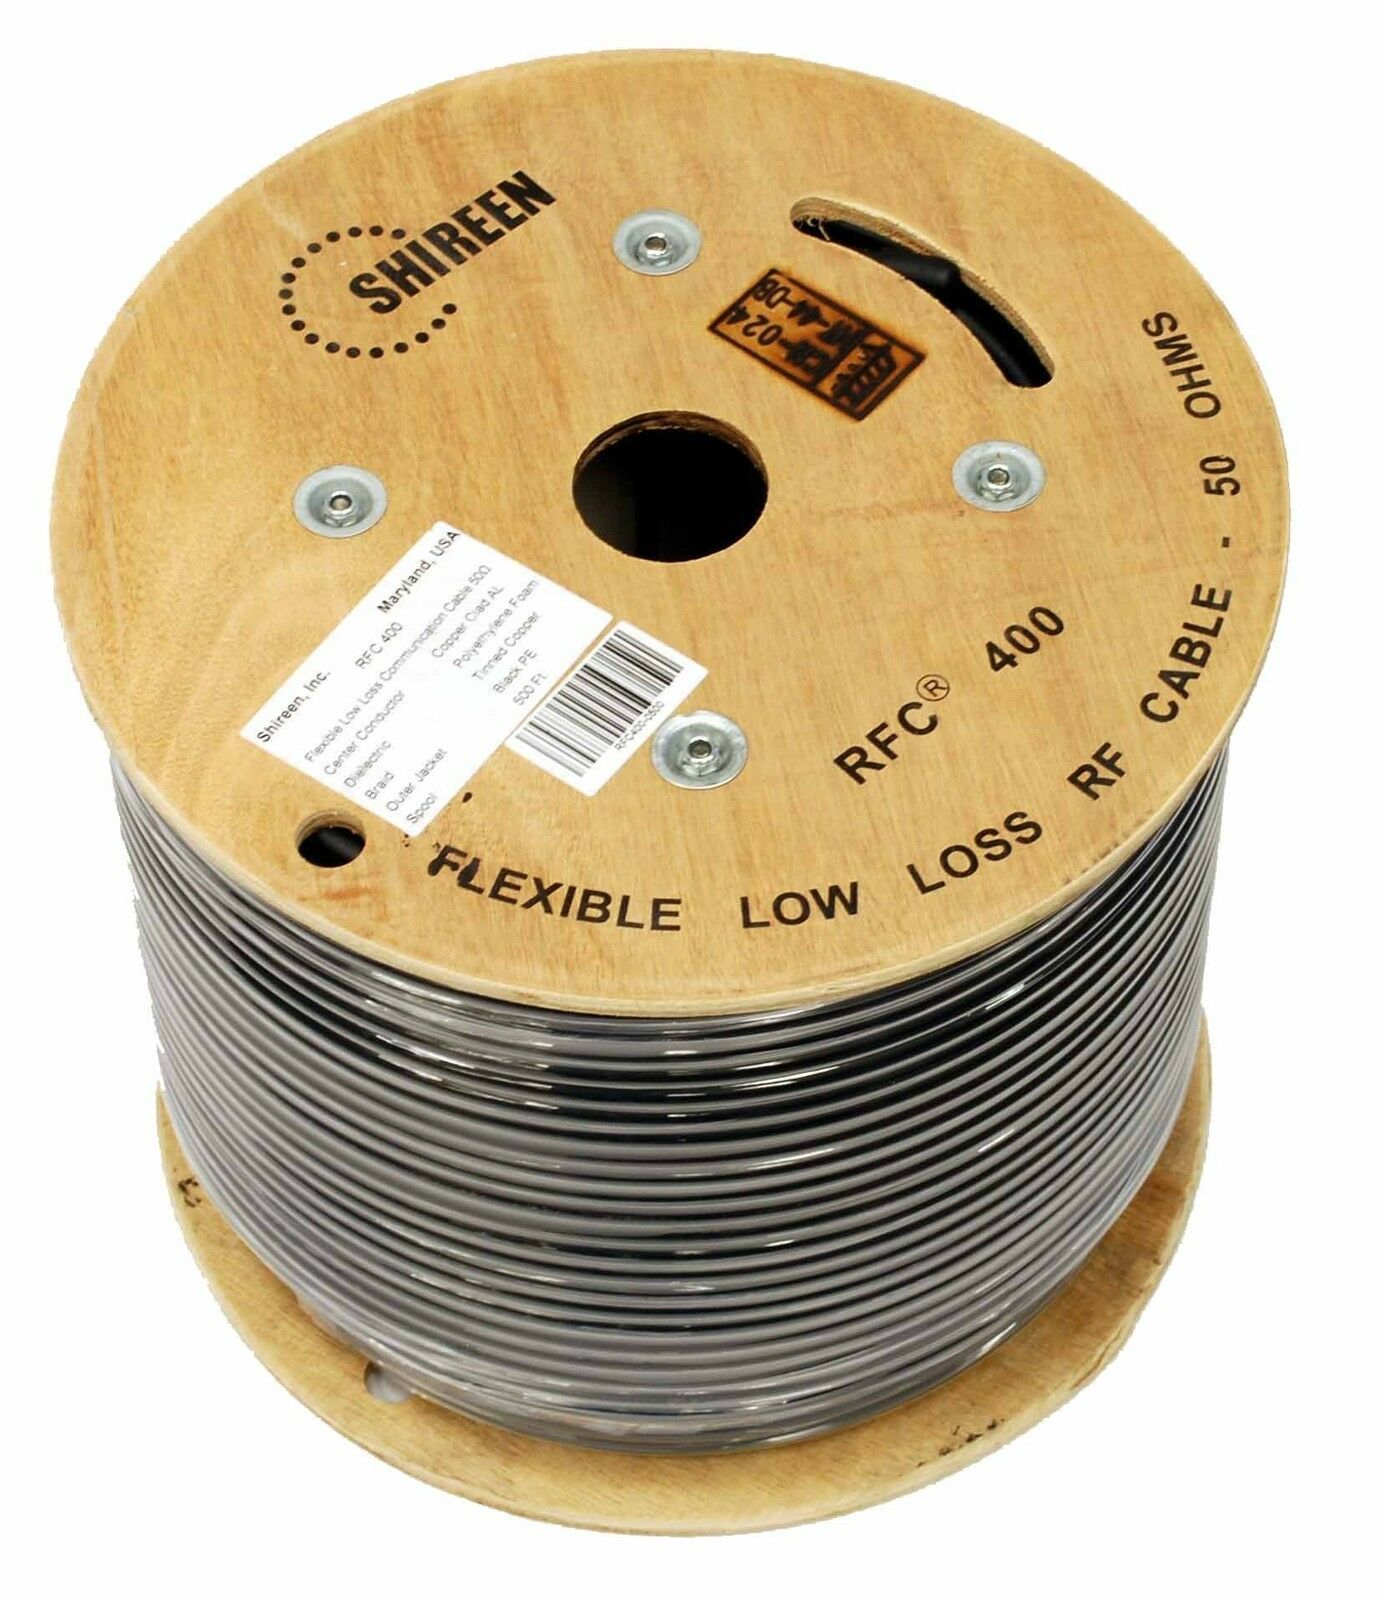 Shireen  RFC400 Flexible Low Loss RF cable 500 foot Spool reel